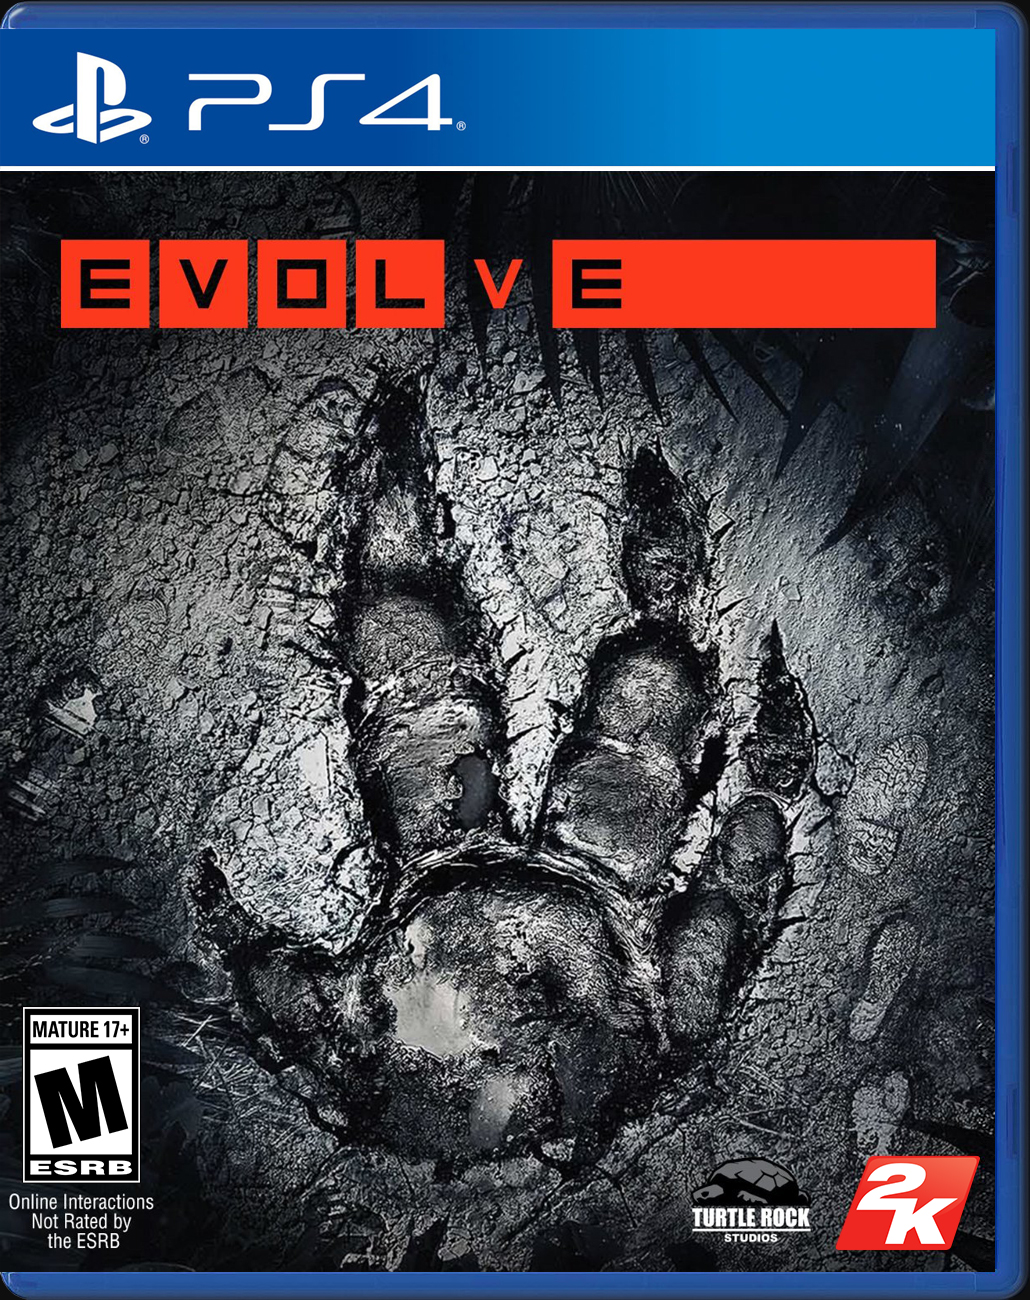 

Evolve PS4 Case

